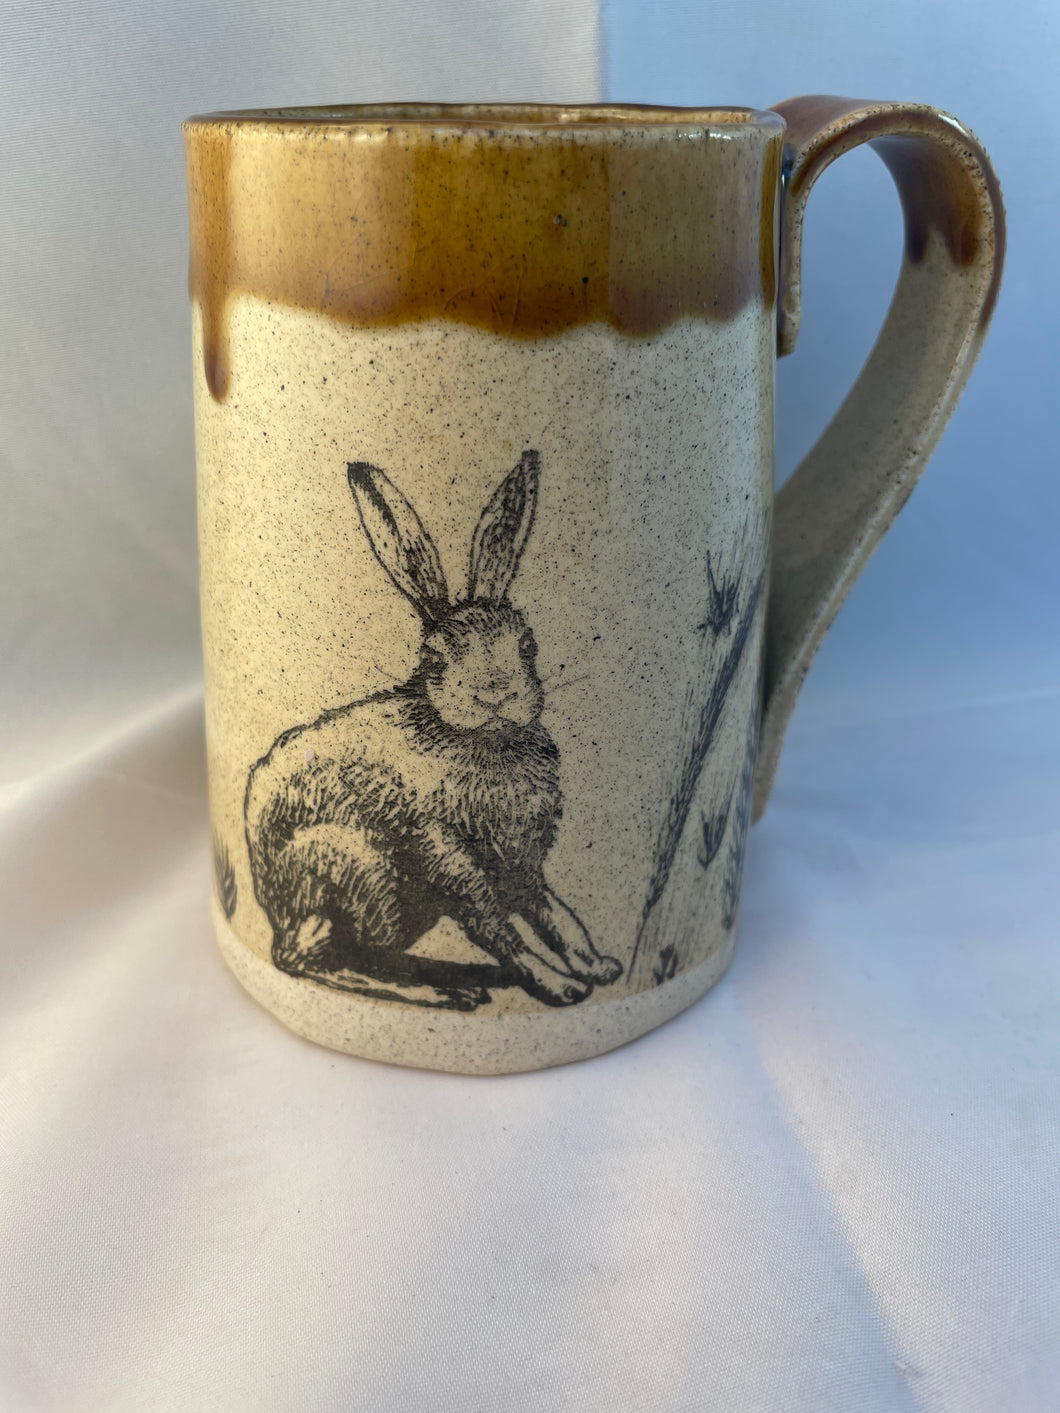 Rabbit, Bumblebee, and Grain ArtPrize Mug